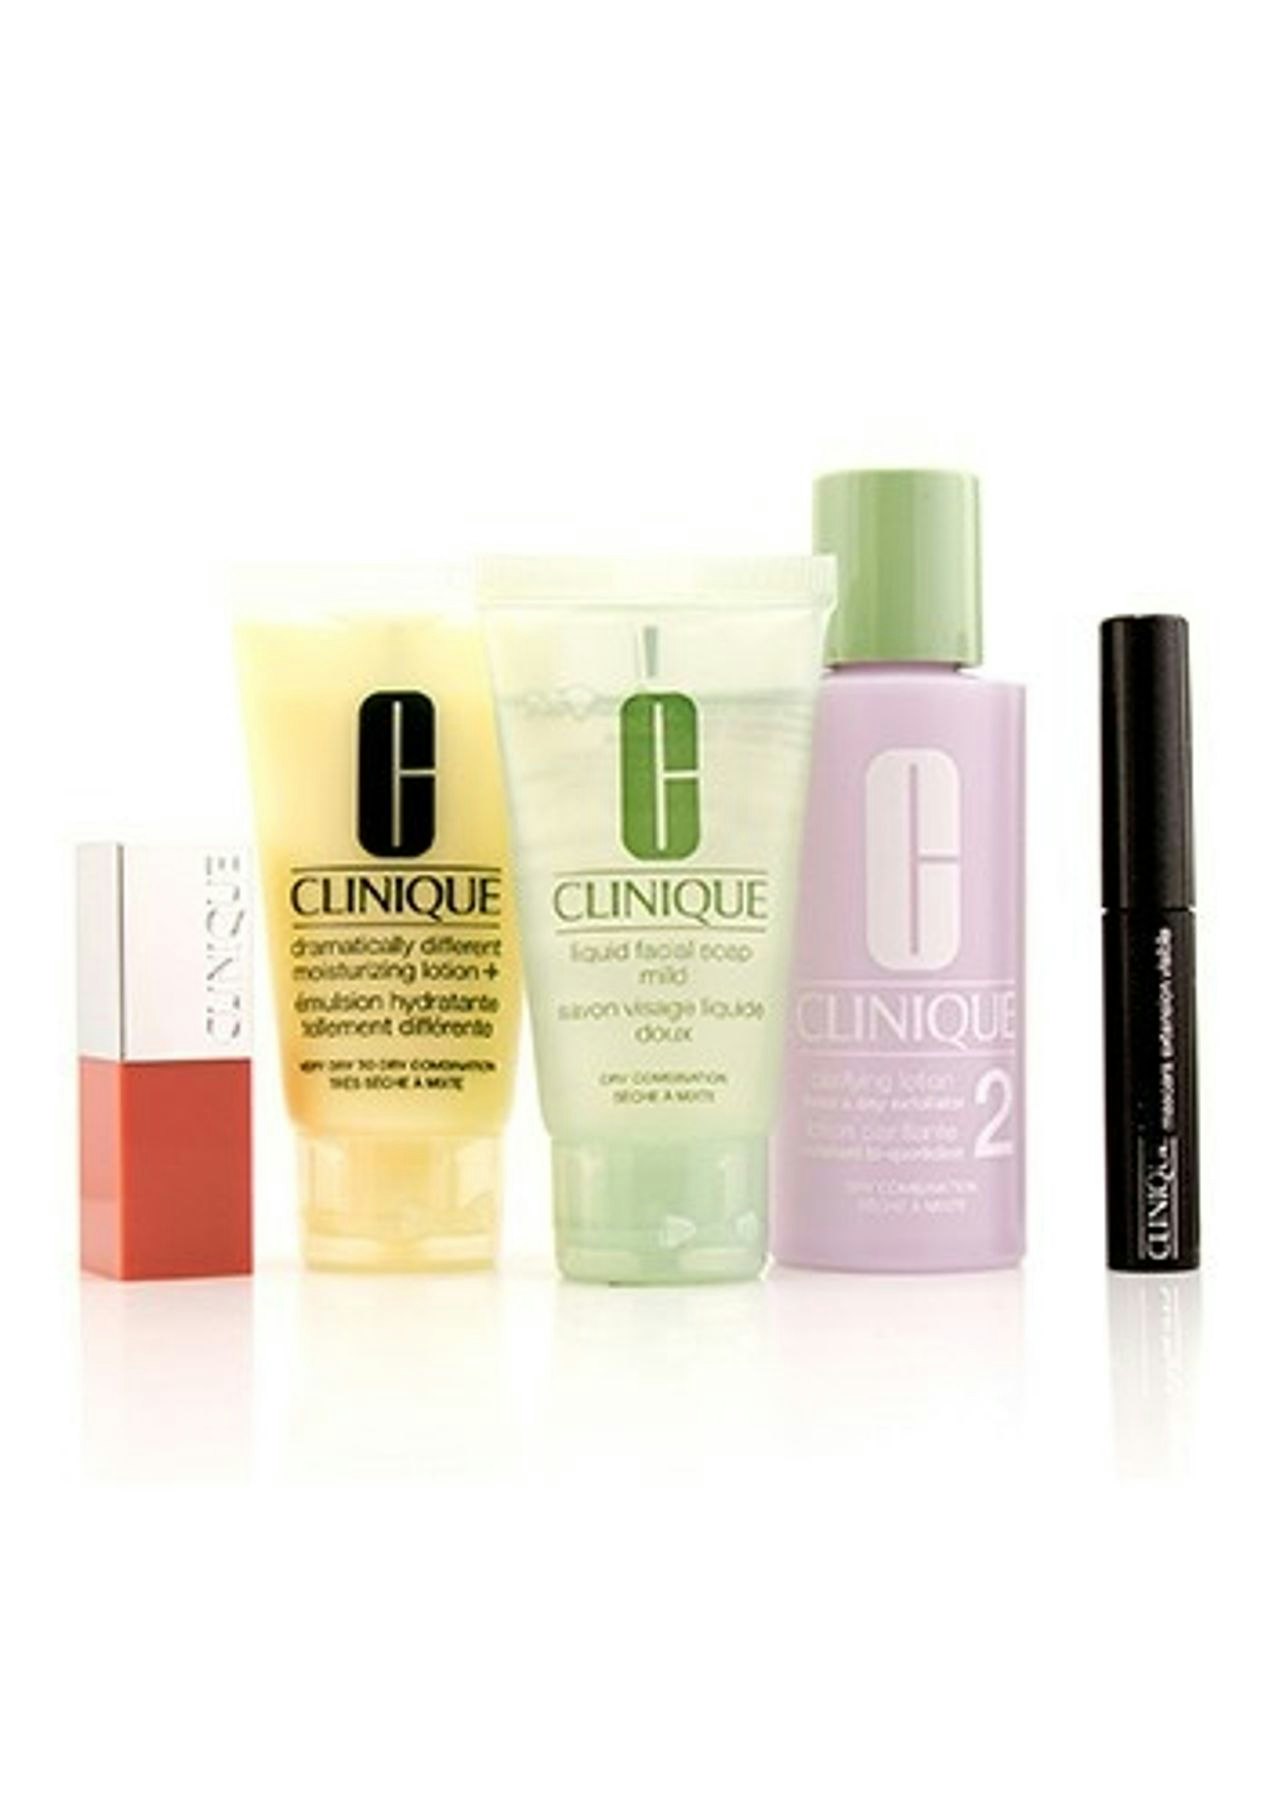 Clinique Liquid facial Soap mild жидкое мыло для лица для нормальной и сухой кожи. Deep 06 Clinique. Step skins